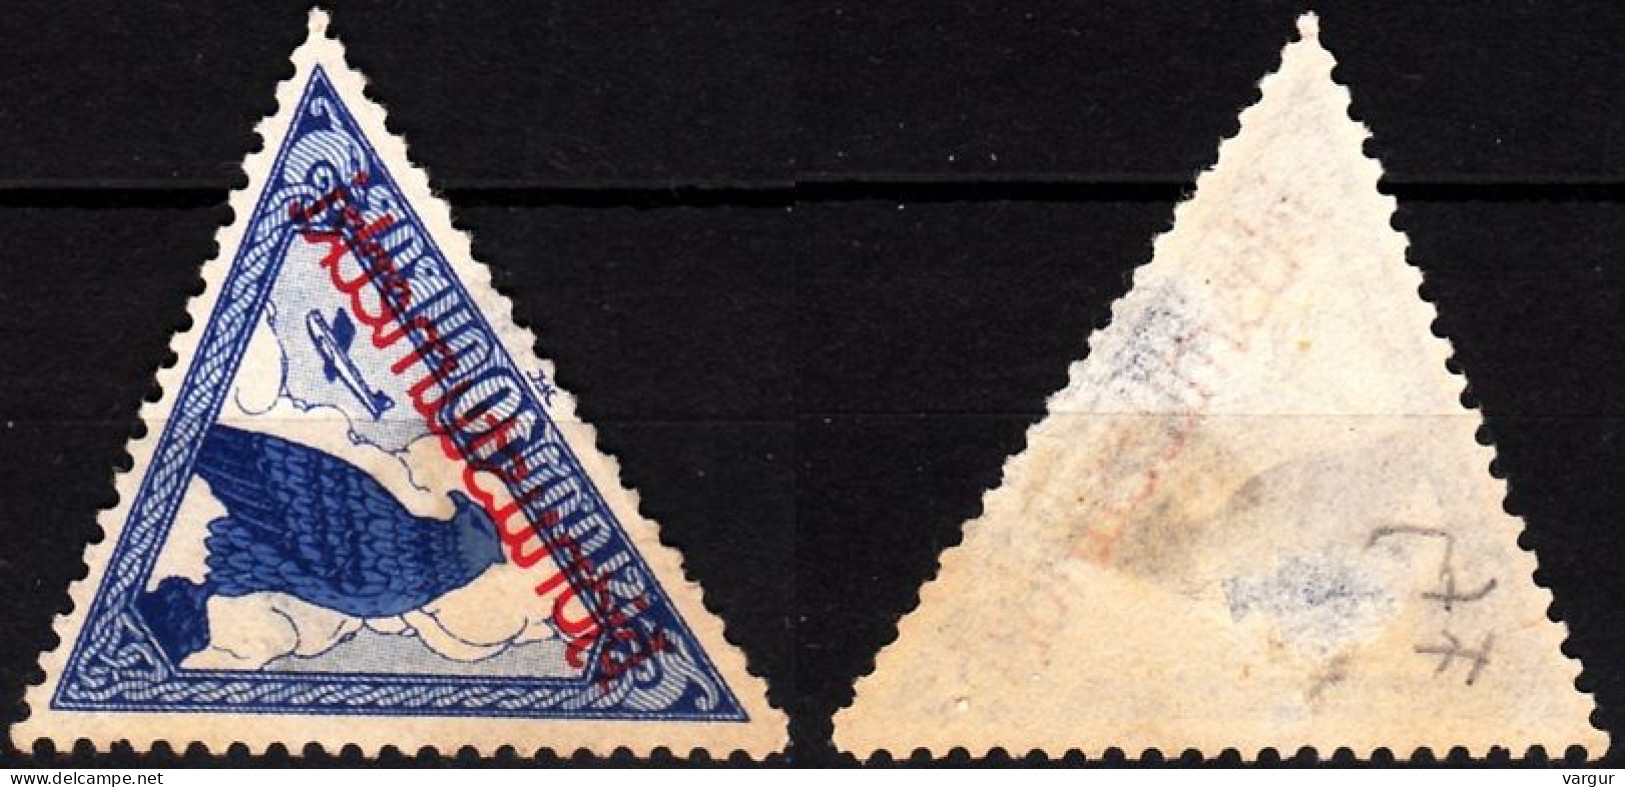 ICELAND / ISLAND Postage Due 1930 Airmail. Eagle, Mint No Gum Lot #2 - Dienstmarken